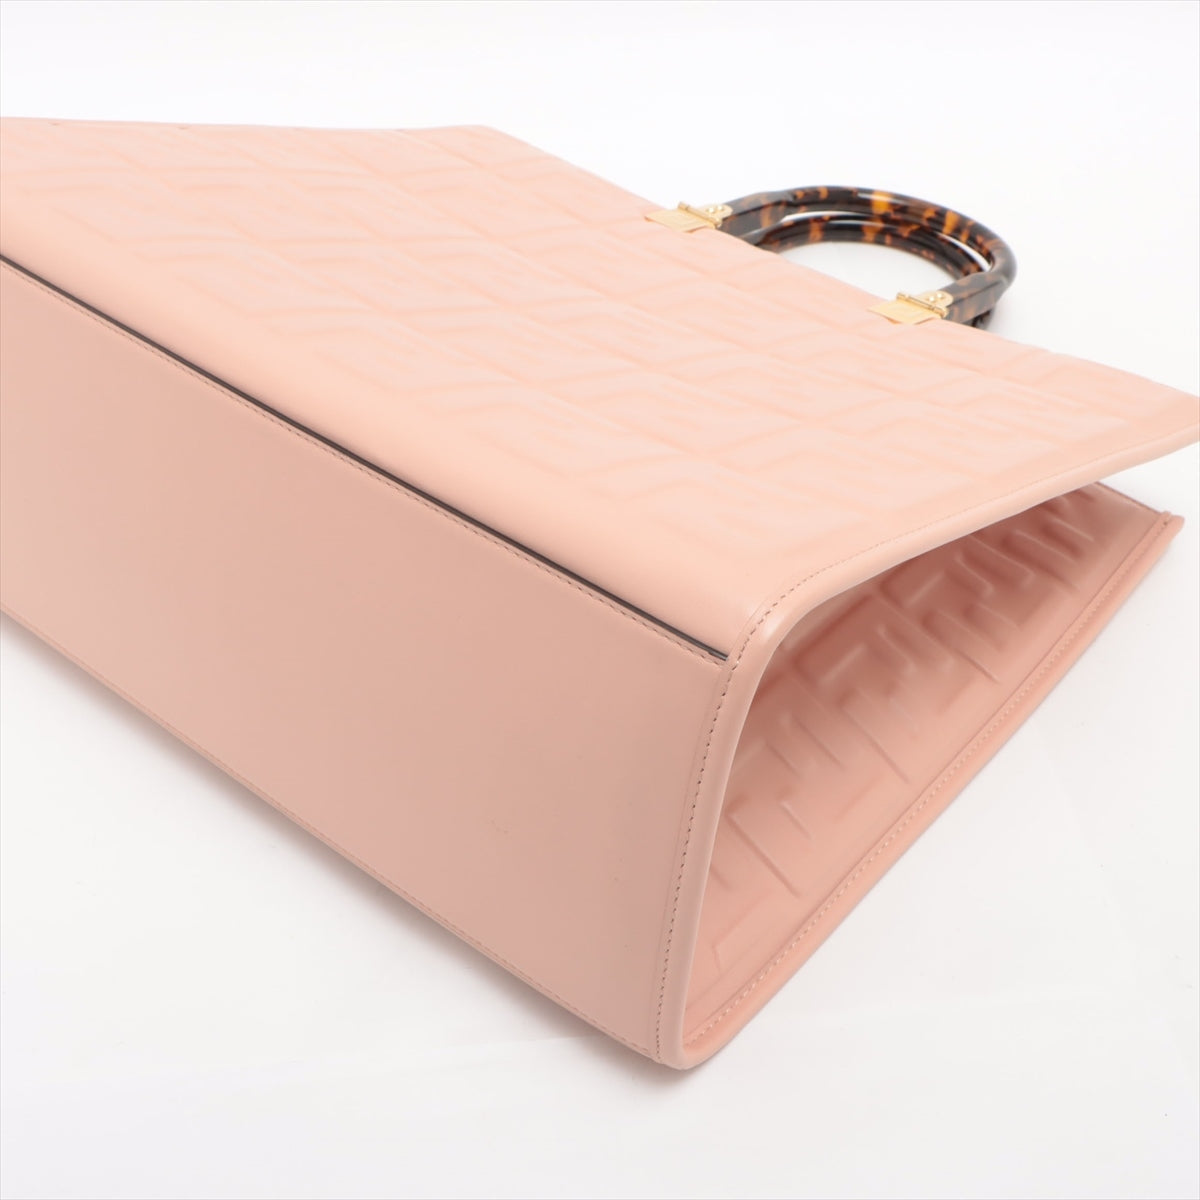 Fendi Sunshine Leather 2way handbag Pink 8BH386